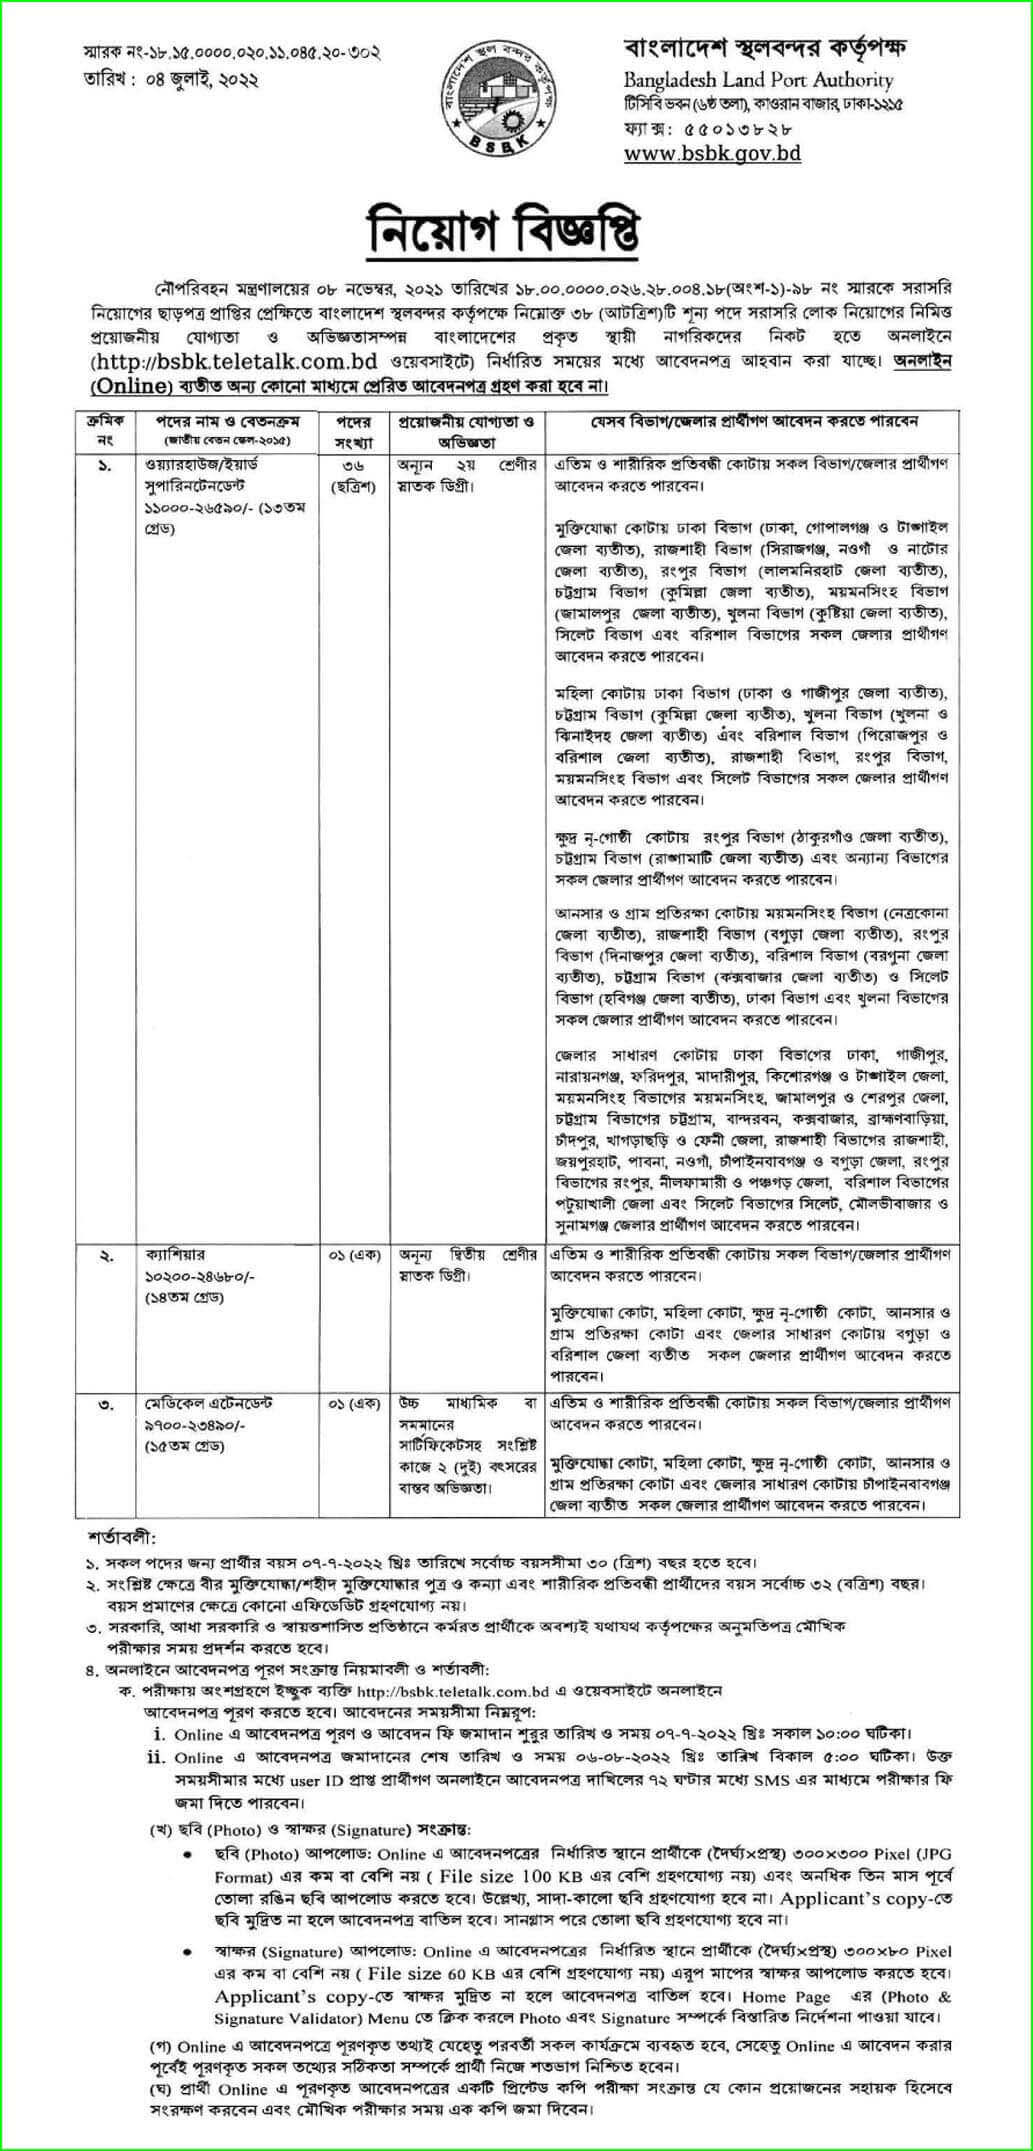 BLPA Job Circular 2022 - blri.teletalk.com.bd Apply ১